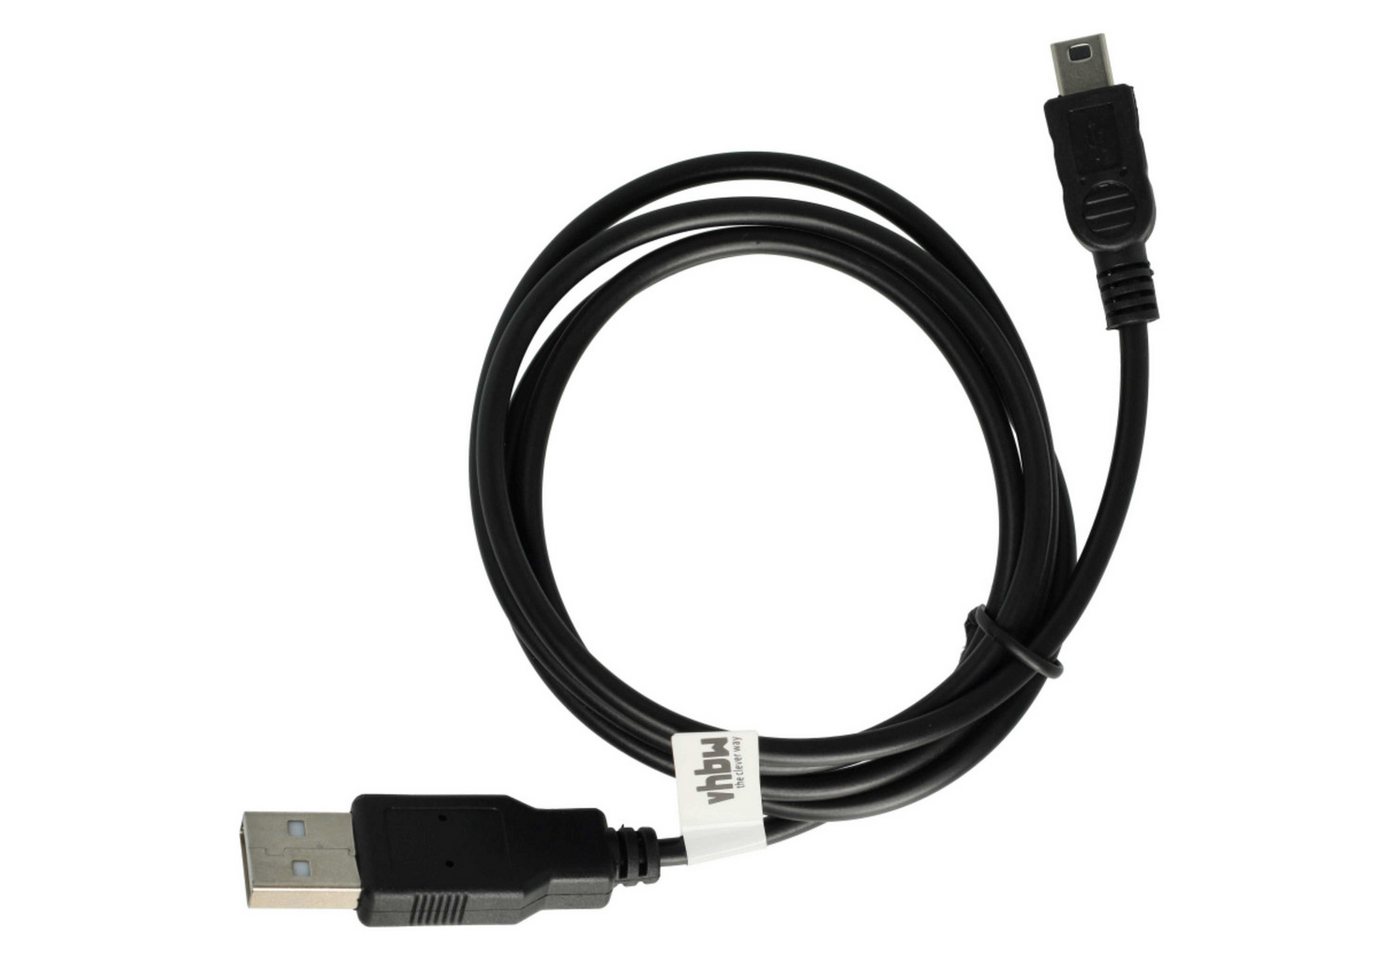 vhbw passend für Sony TRV840, TRV950, VX700 Kamera / Mobilfunk / Foto DSLR USB-Kabel von vhbw